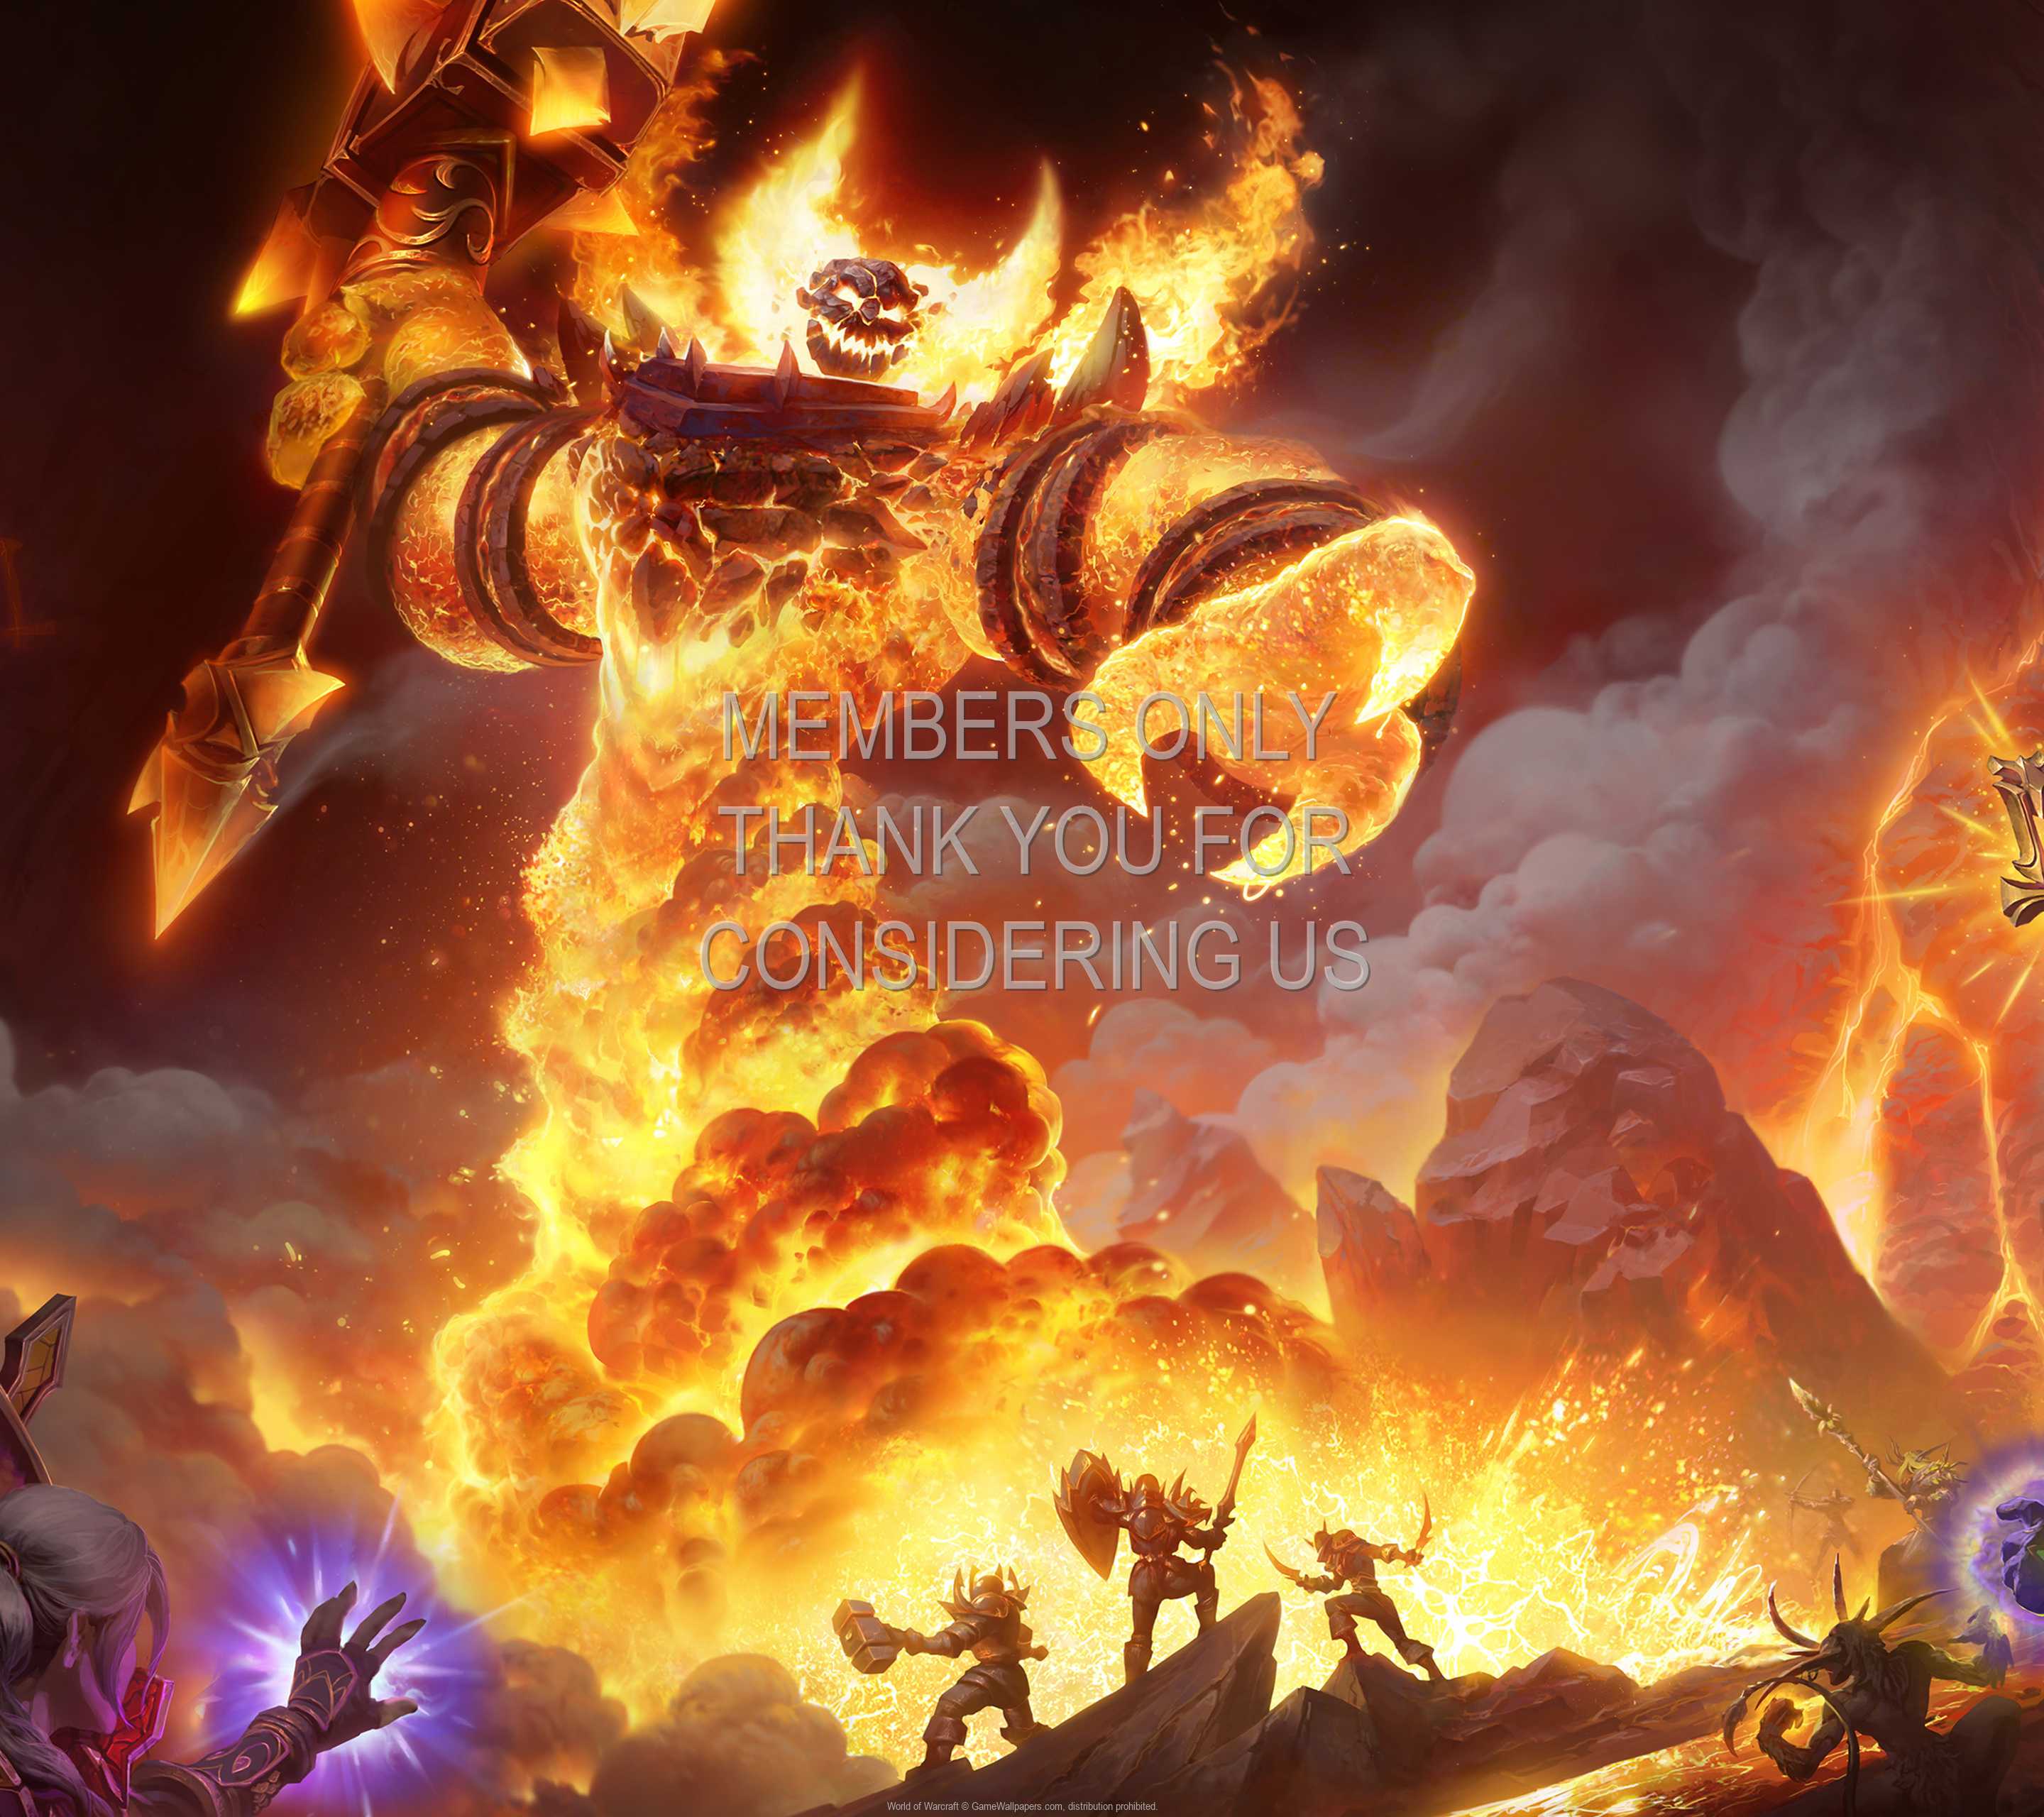 World of Warcraft 1440p Horizontal Mobile wallpaper or background 18